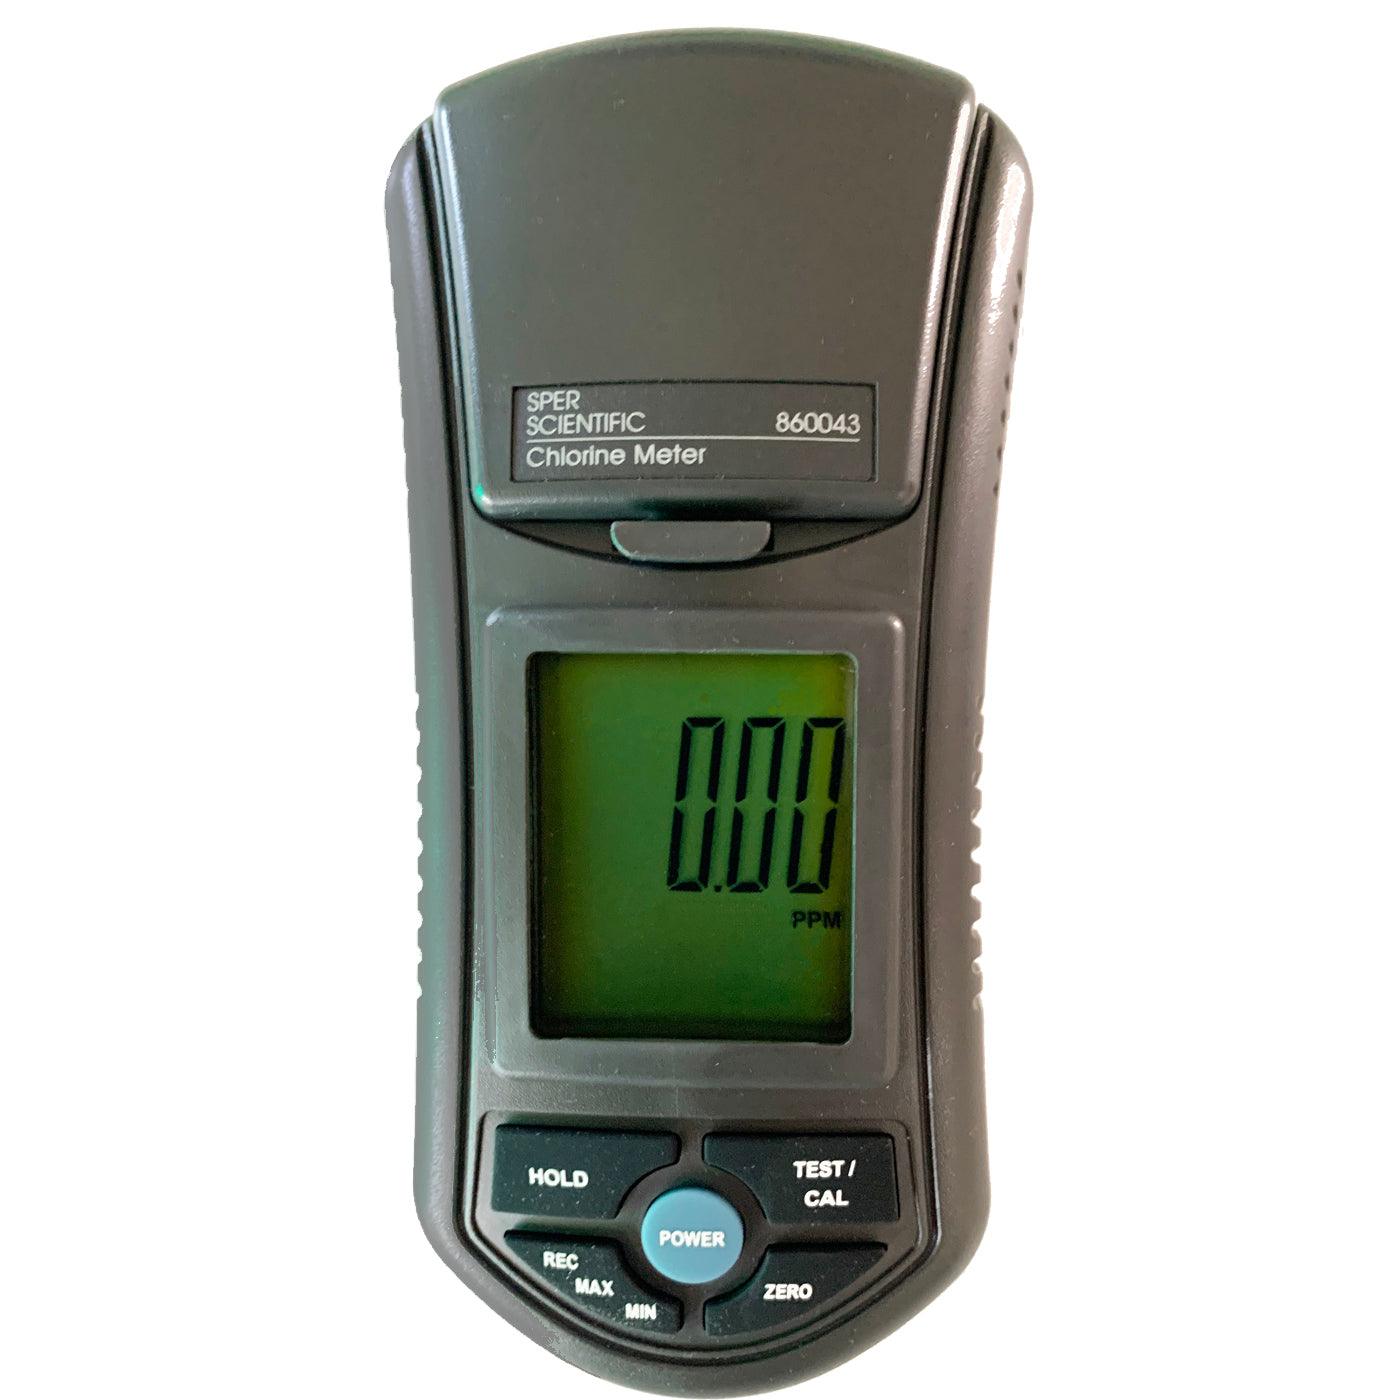 Pocket Digital Refractometer - Brix 40 to 88% – Sper Scientific Direct